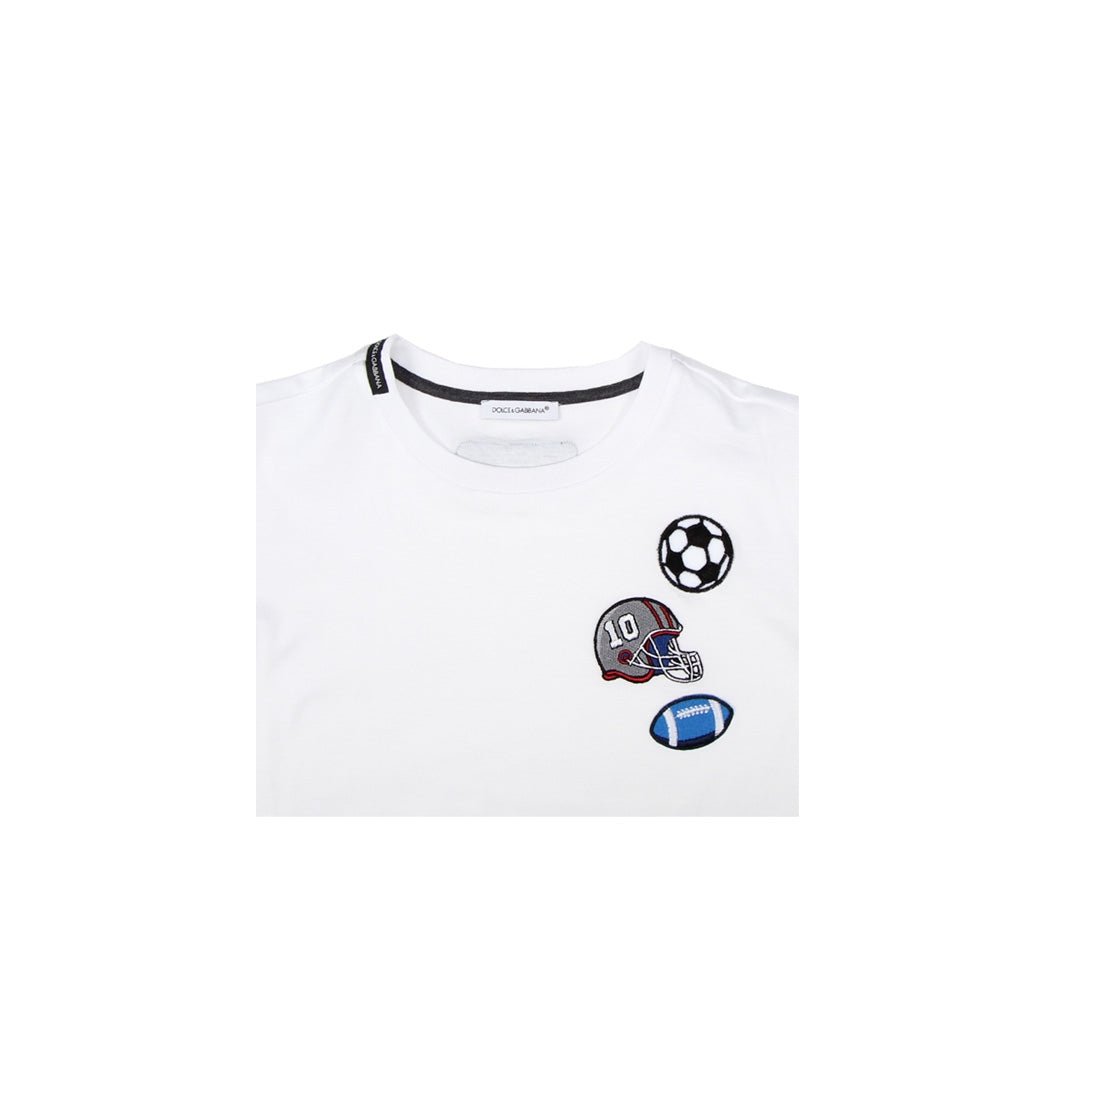 Dolce & Gabbana Kids Football White T-Shirt - Retro Designer Wear